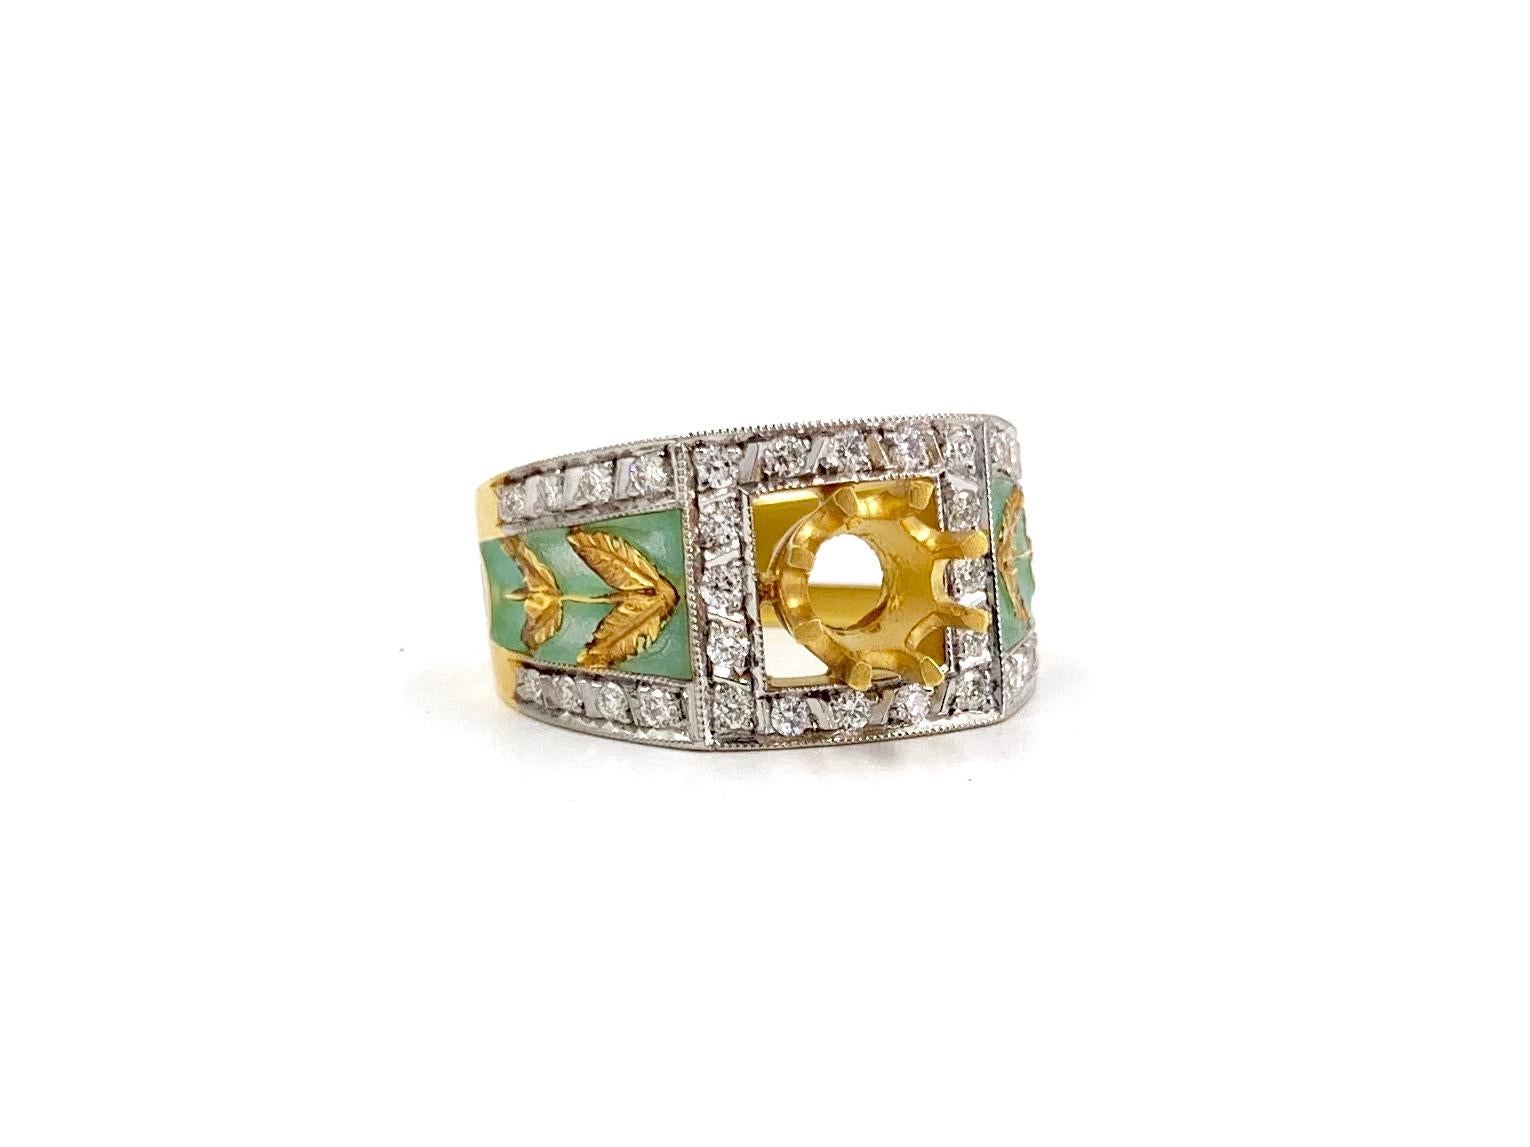 Art Nouveau Masriera y Carreras 18 Karat Diamond and Leaf Enamel Ring Setting For Sale